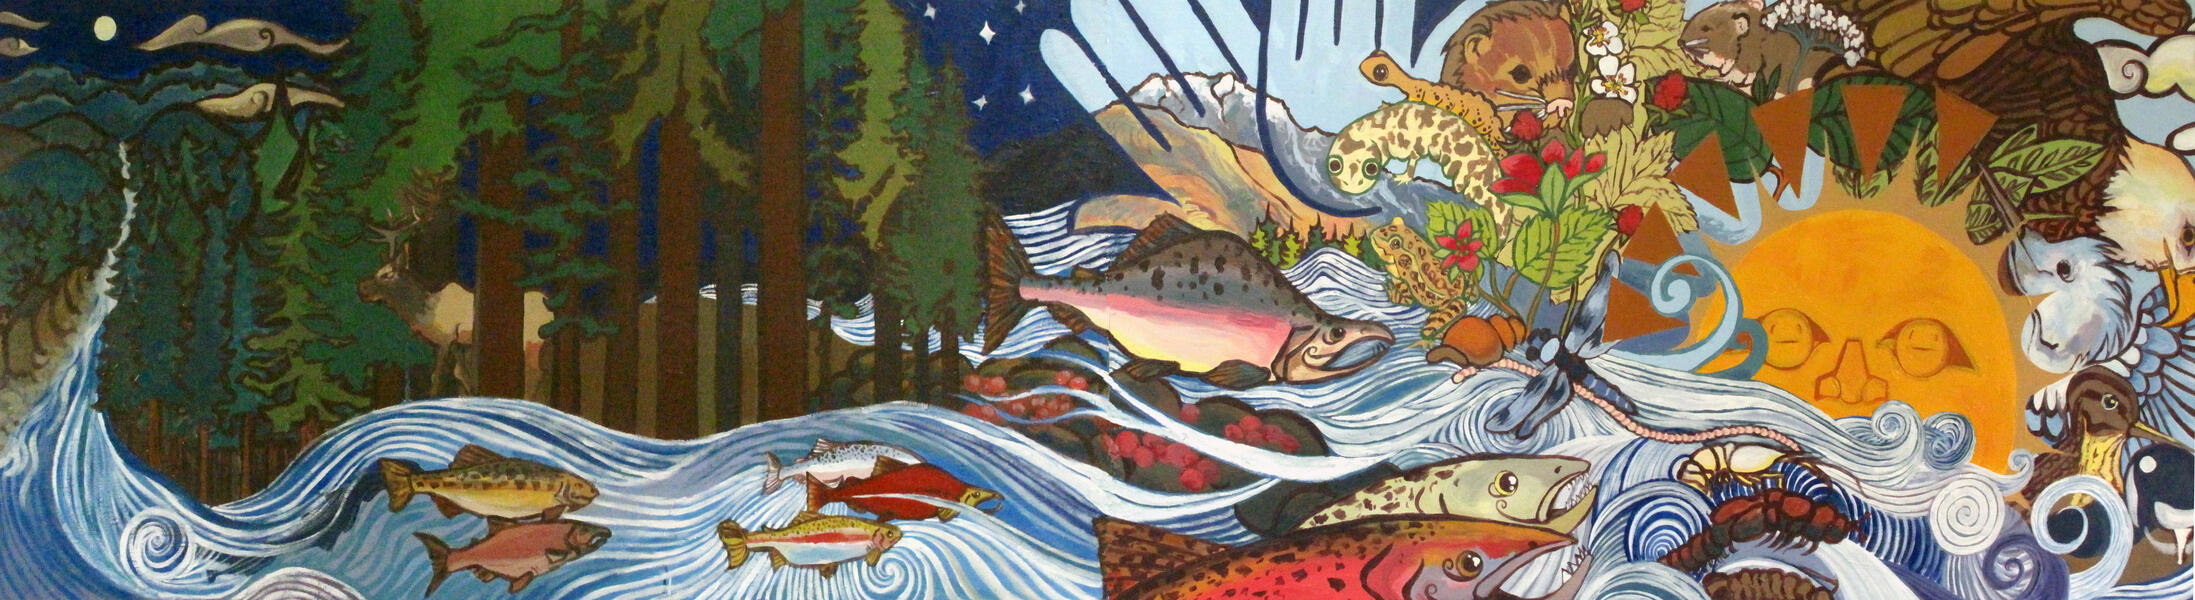 Skagit River Watershed Mural 